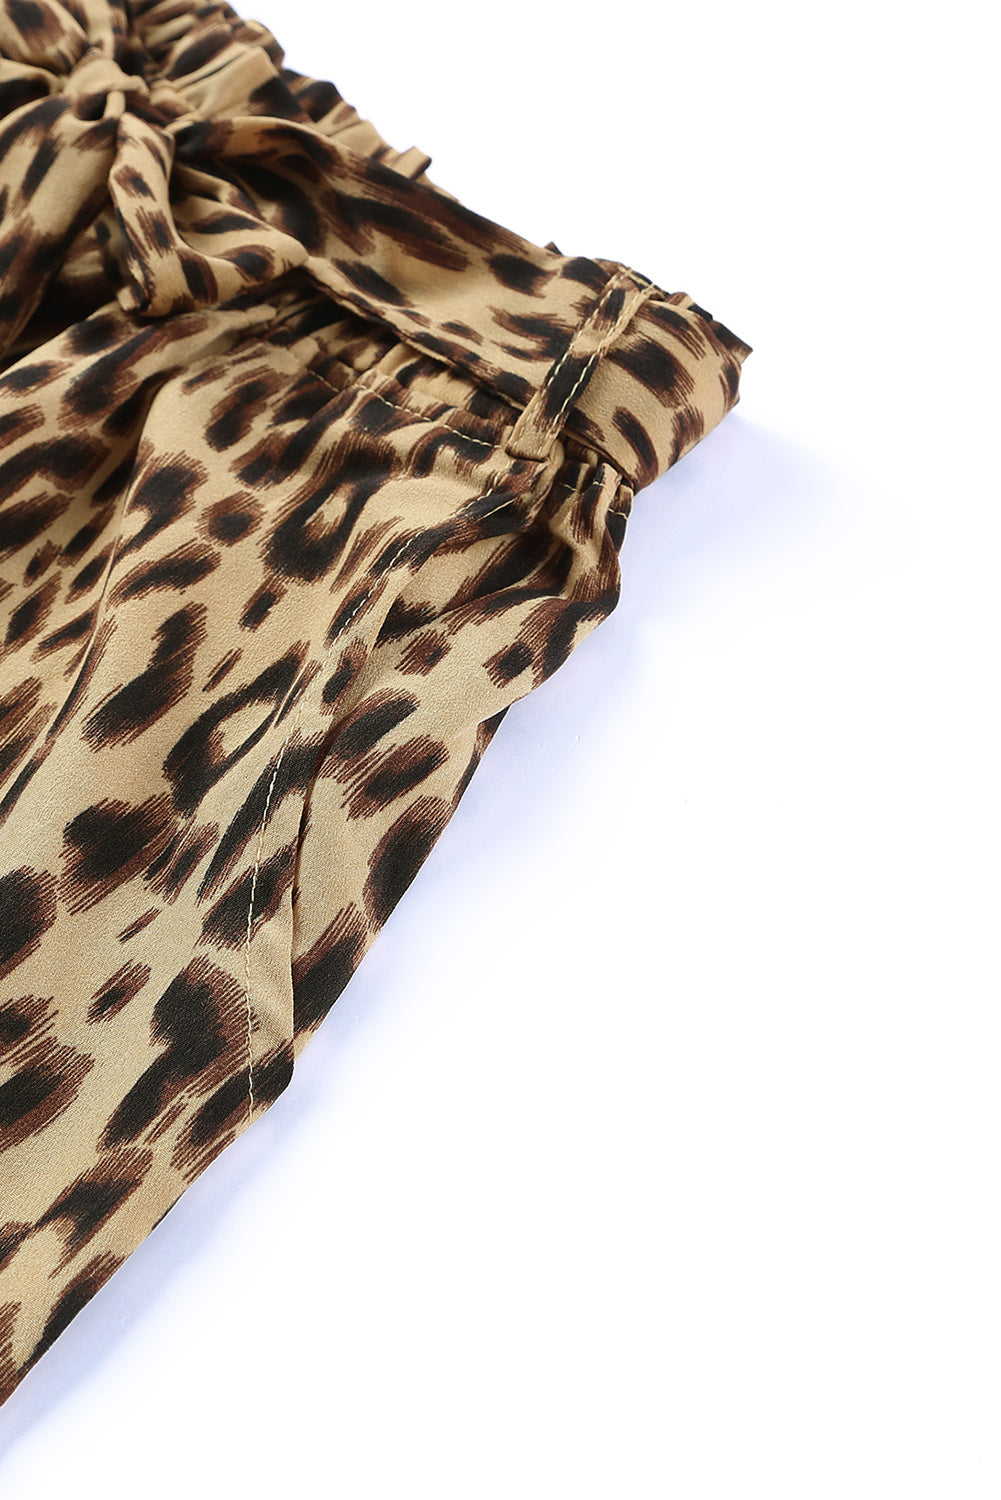 Cheetah Casual Pockets Frill Tie Waist Shorts